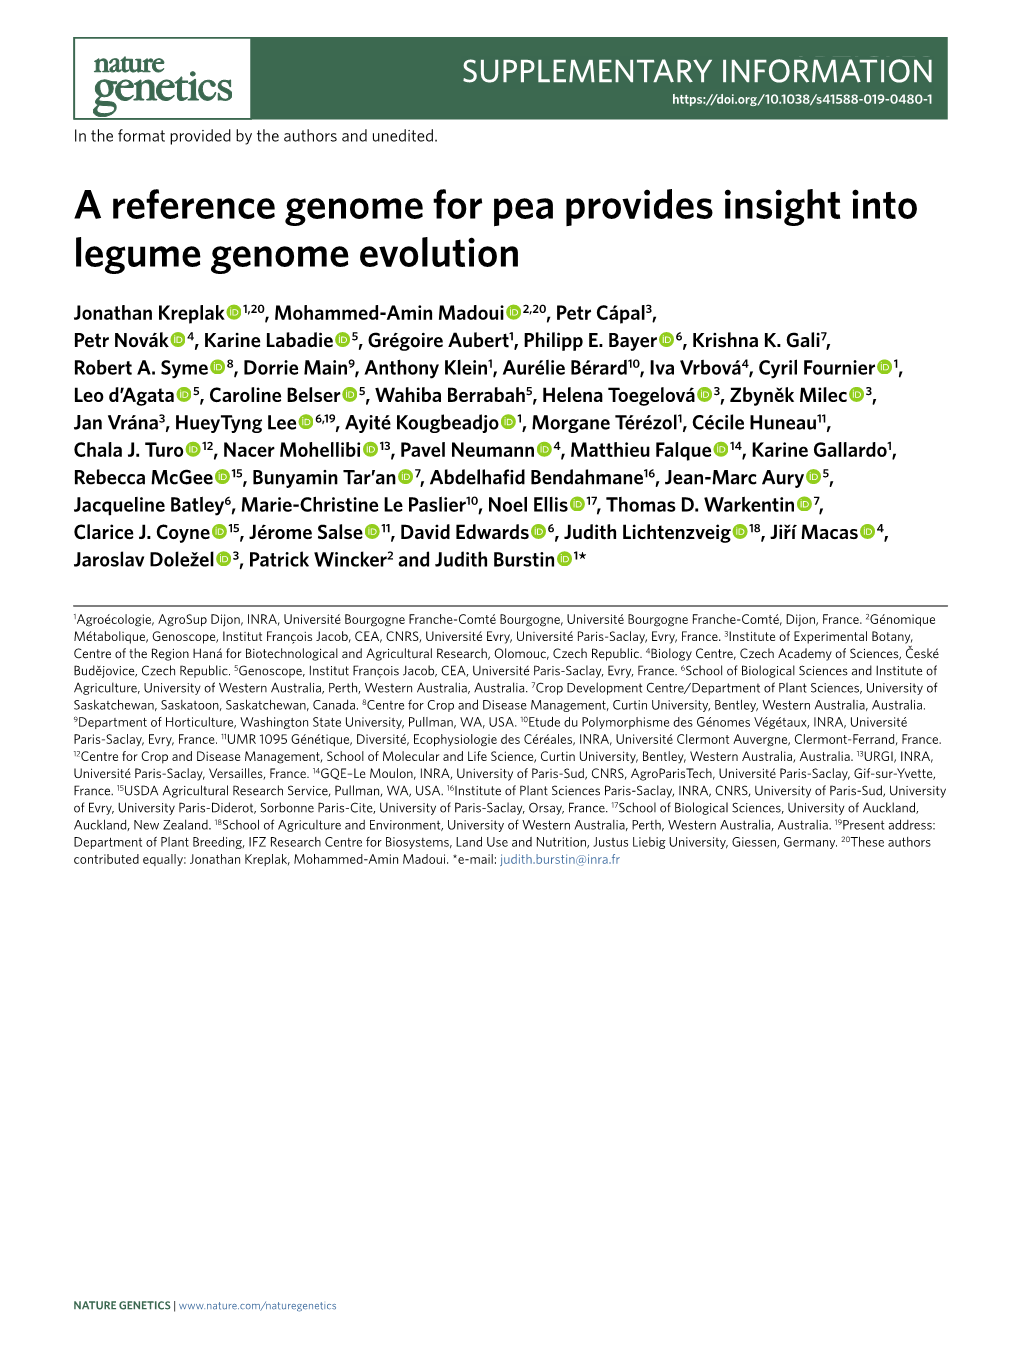 A Reference Genome for Pea Provides Insight Into Legume Genome Evolution